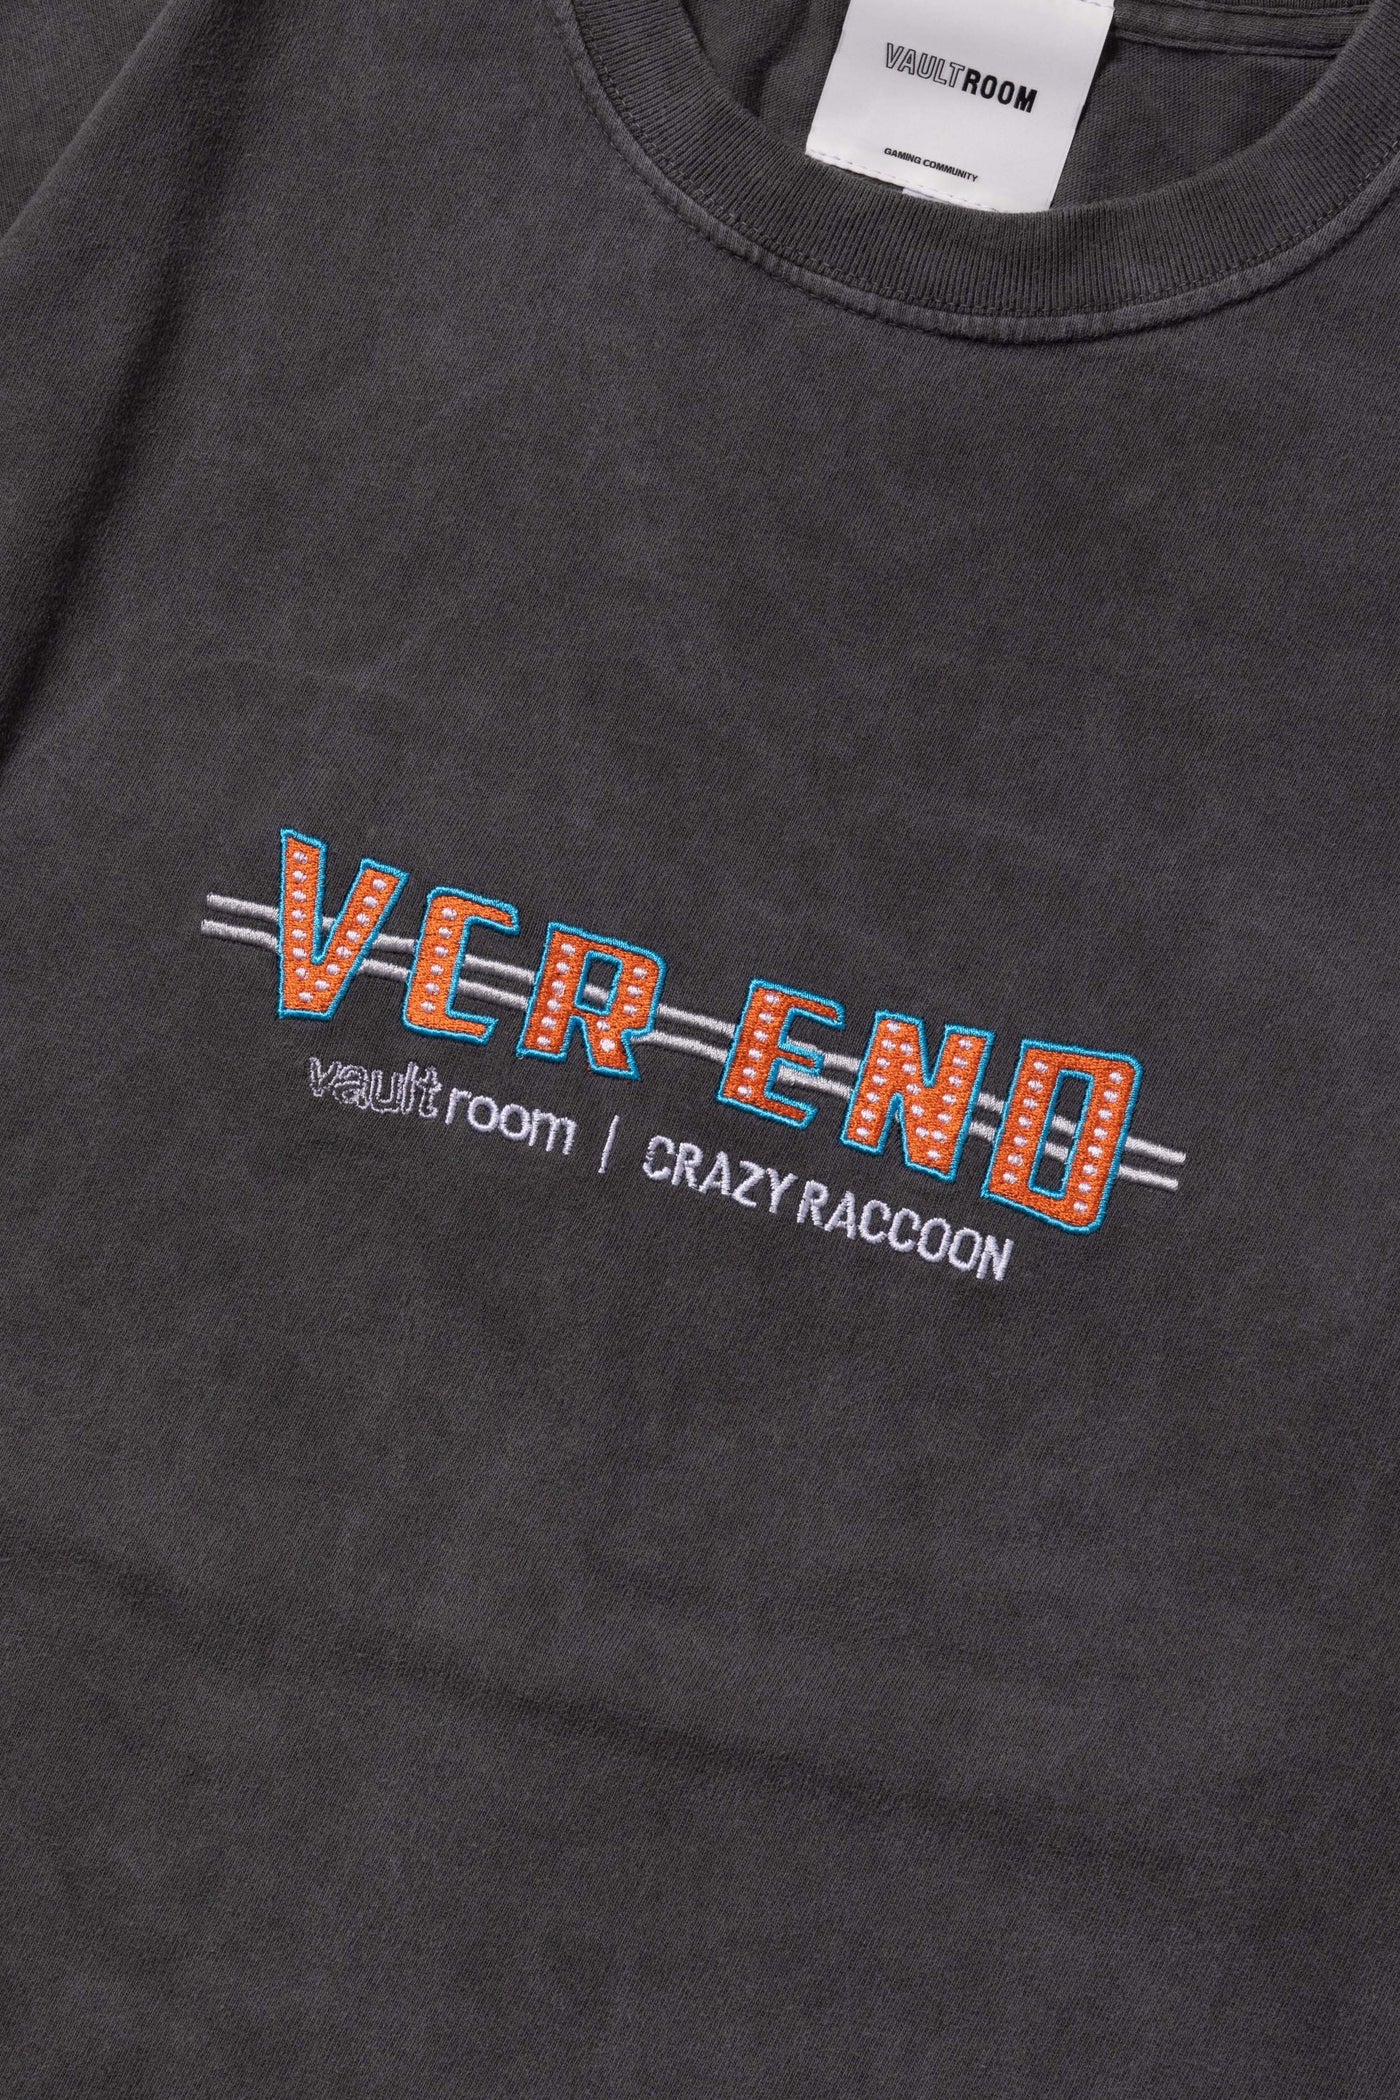 VAULTROOM × 002 TEE XL CHARCOAL XLvaultroom - Tシャツ/カットソー